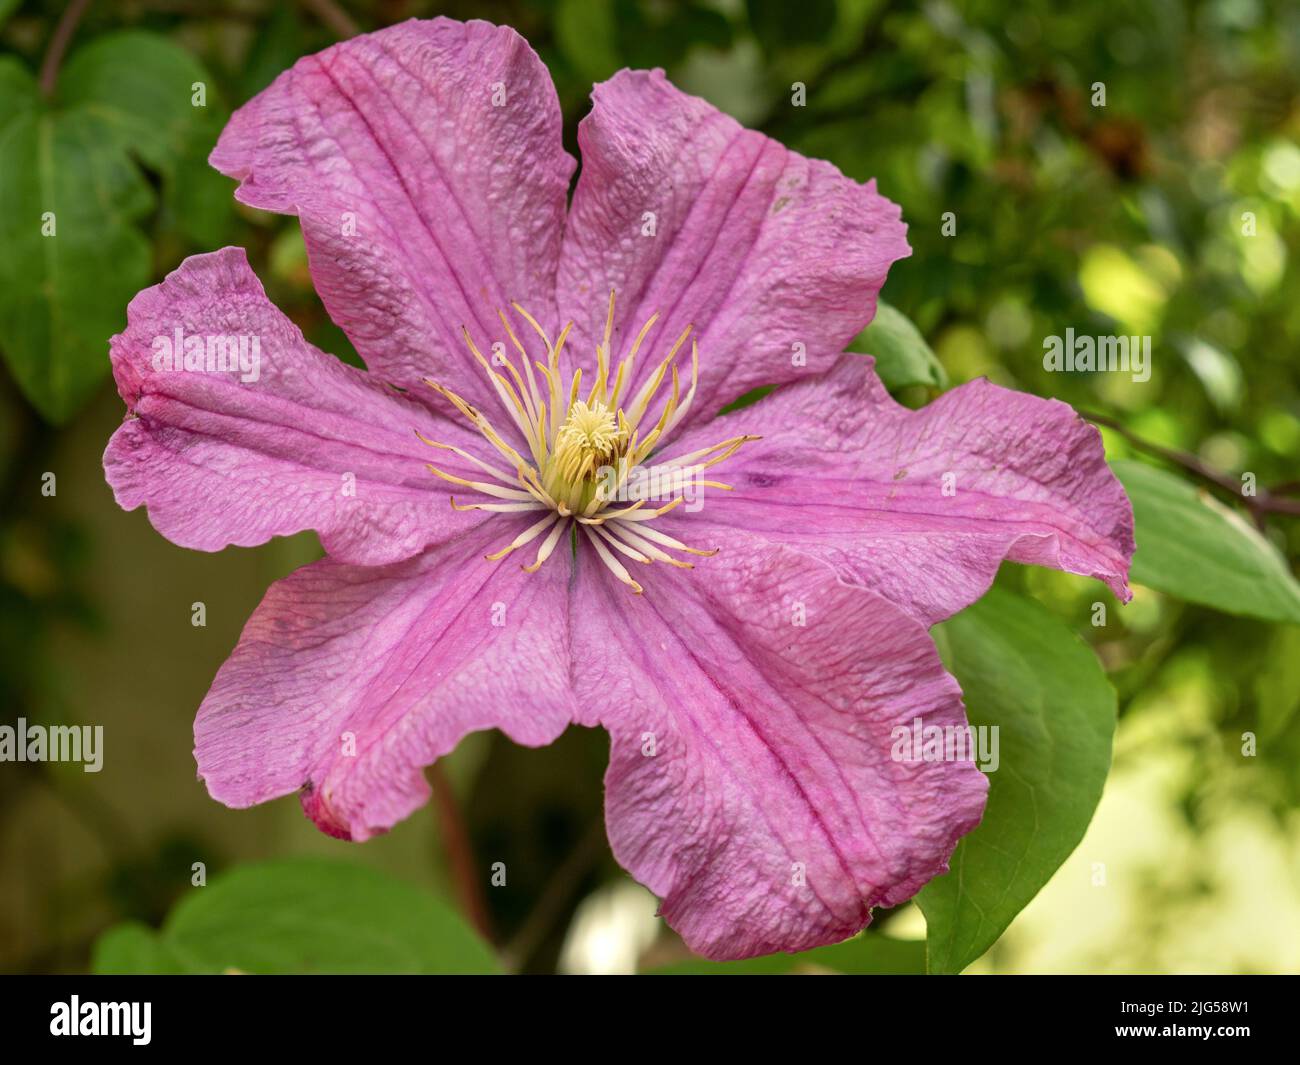 Pink Clematis flower, variety Comtesse de Bouchaud Stock Photo